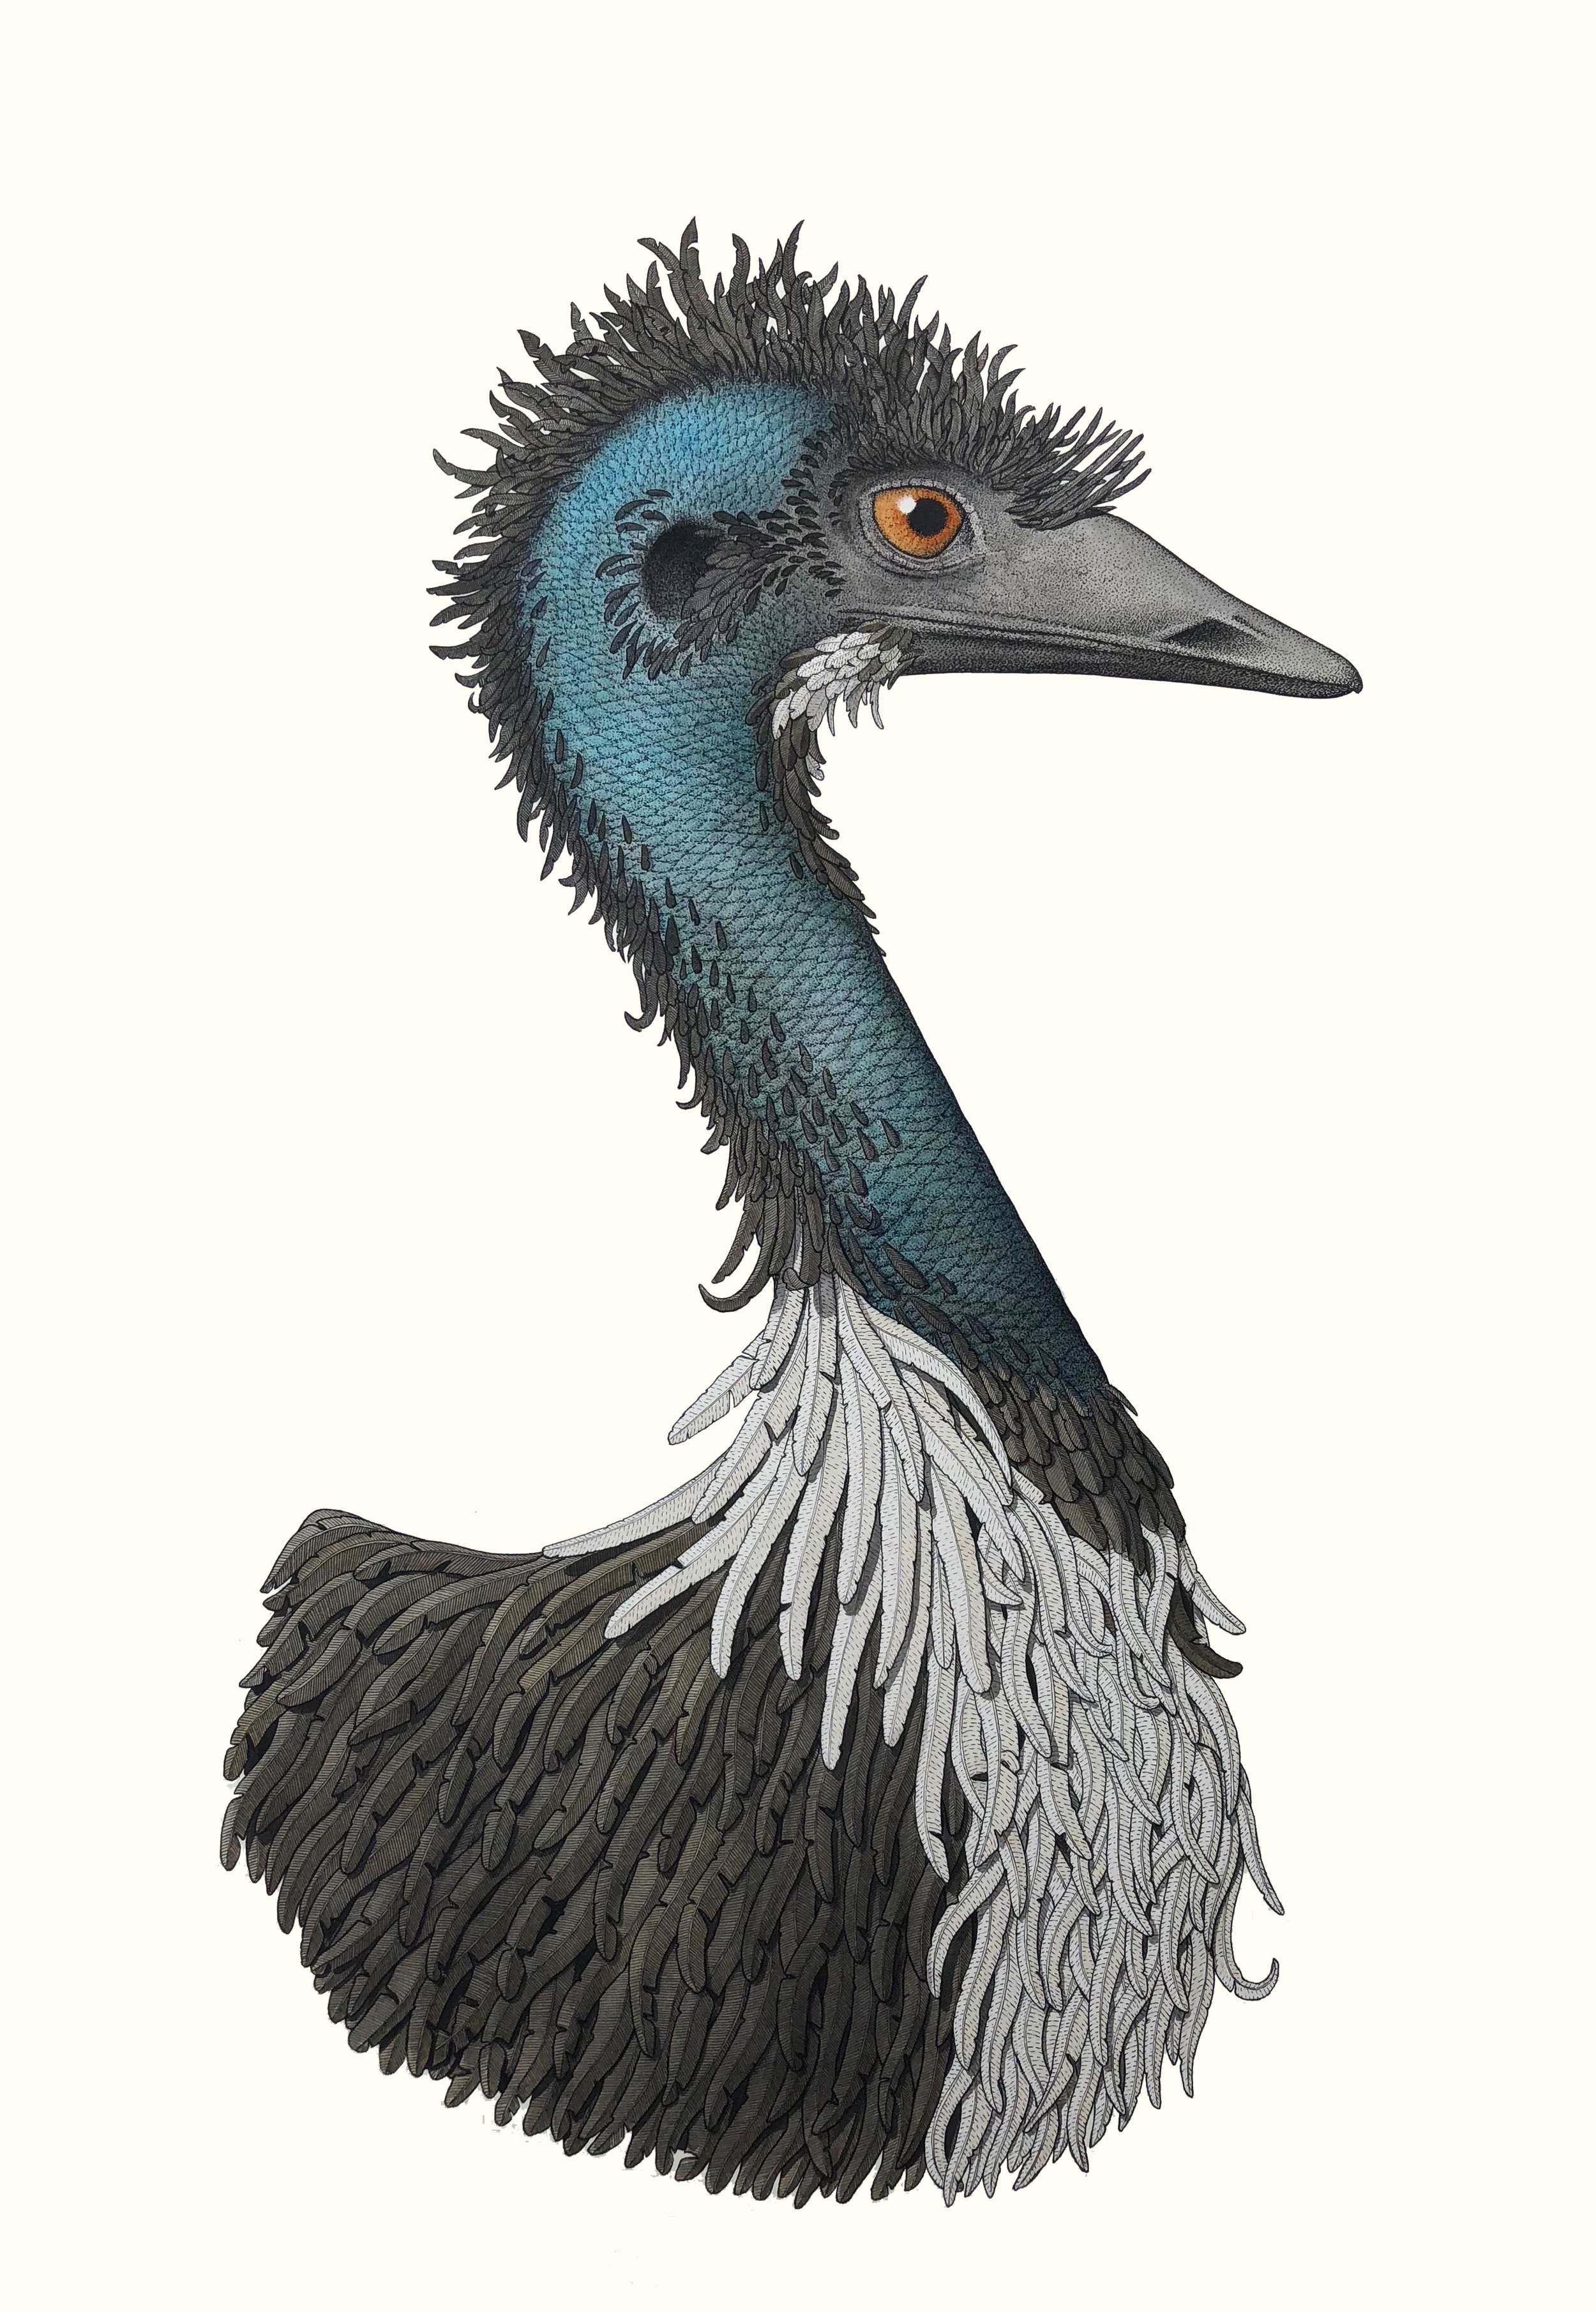 'The Emu'